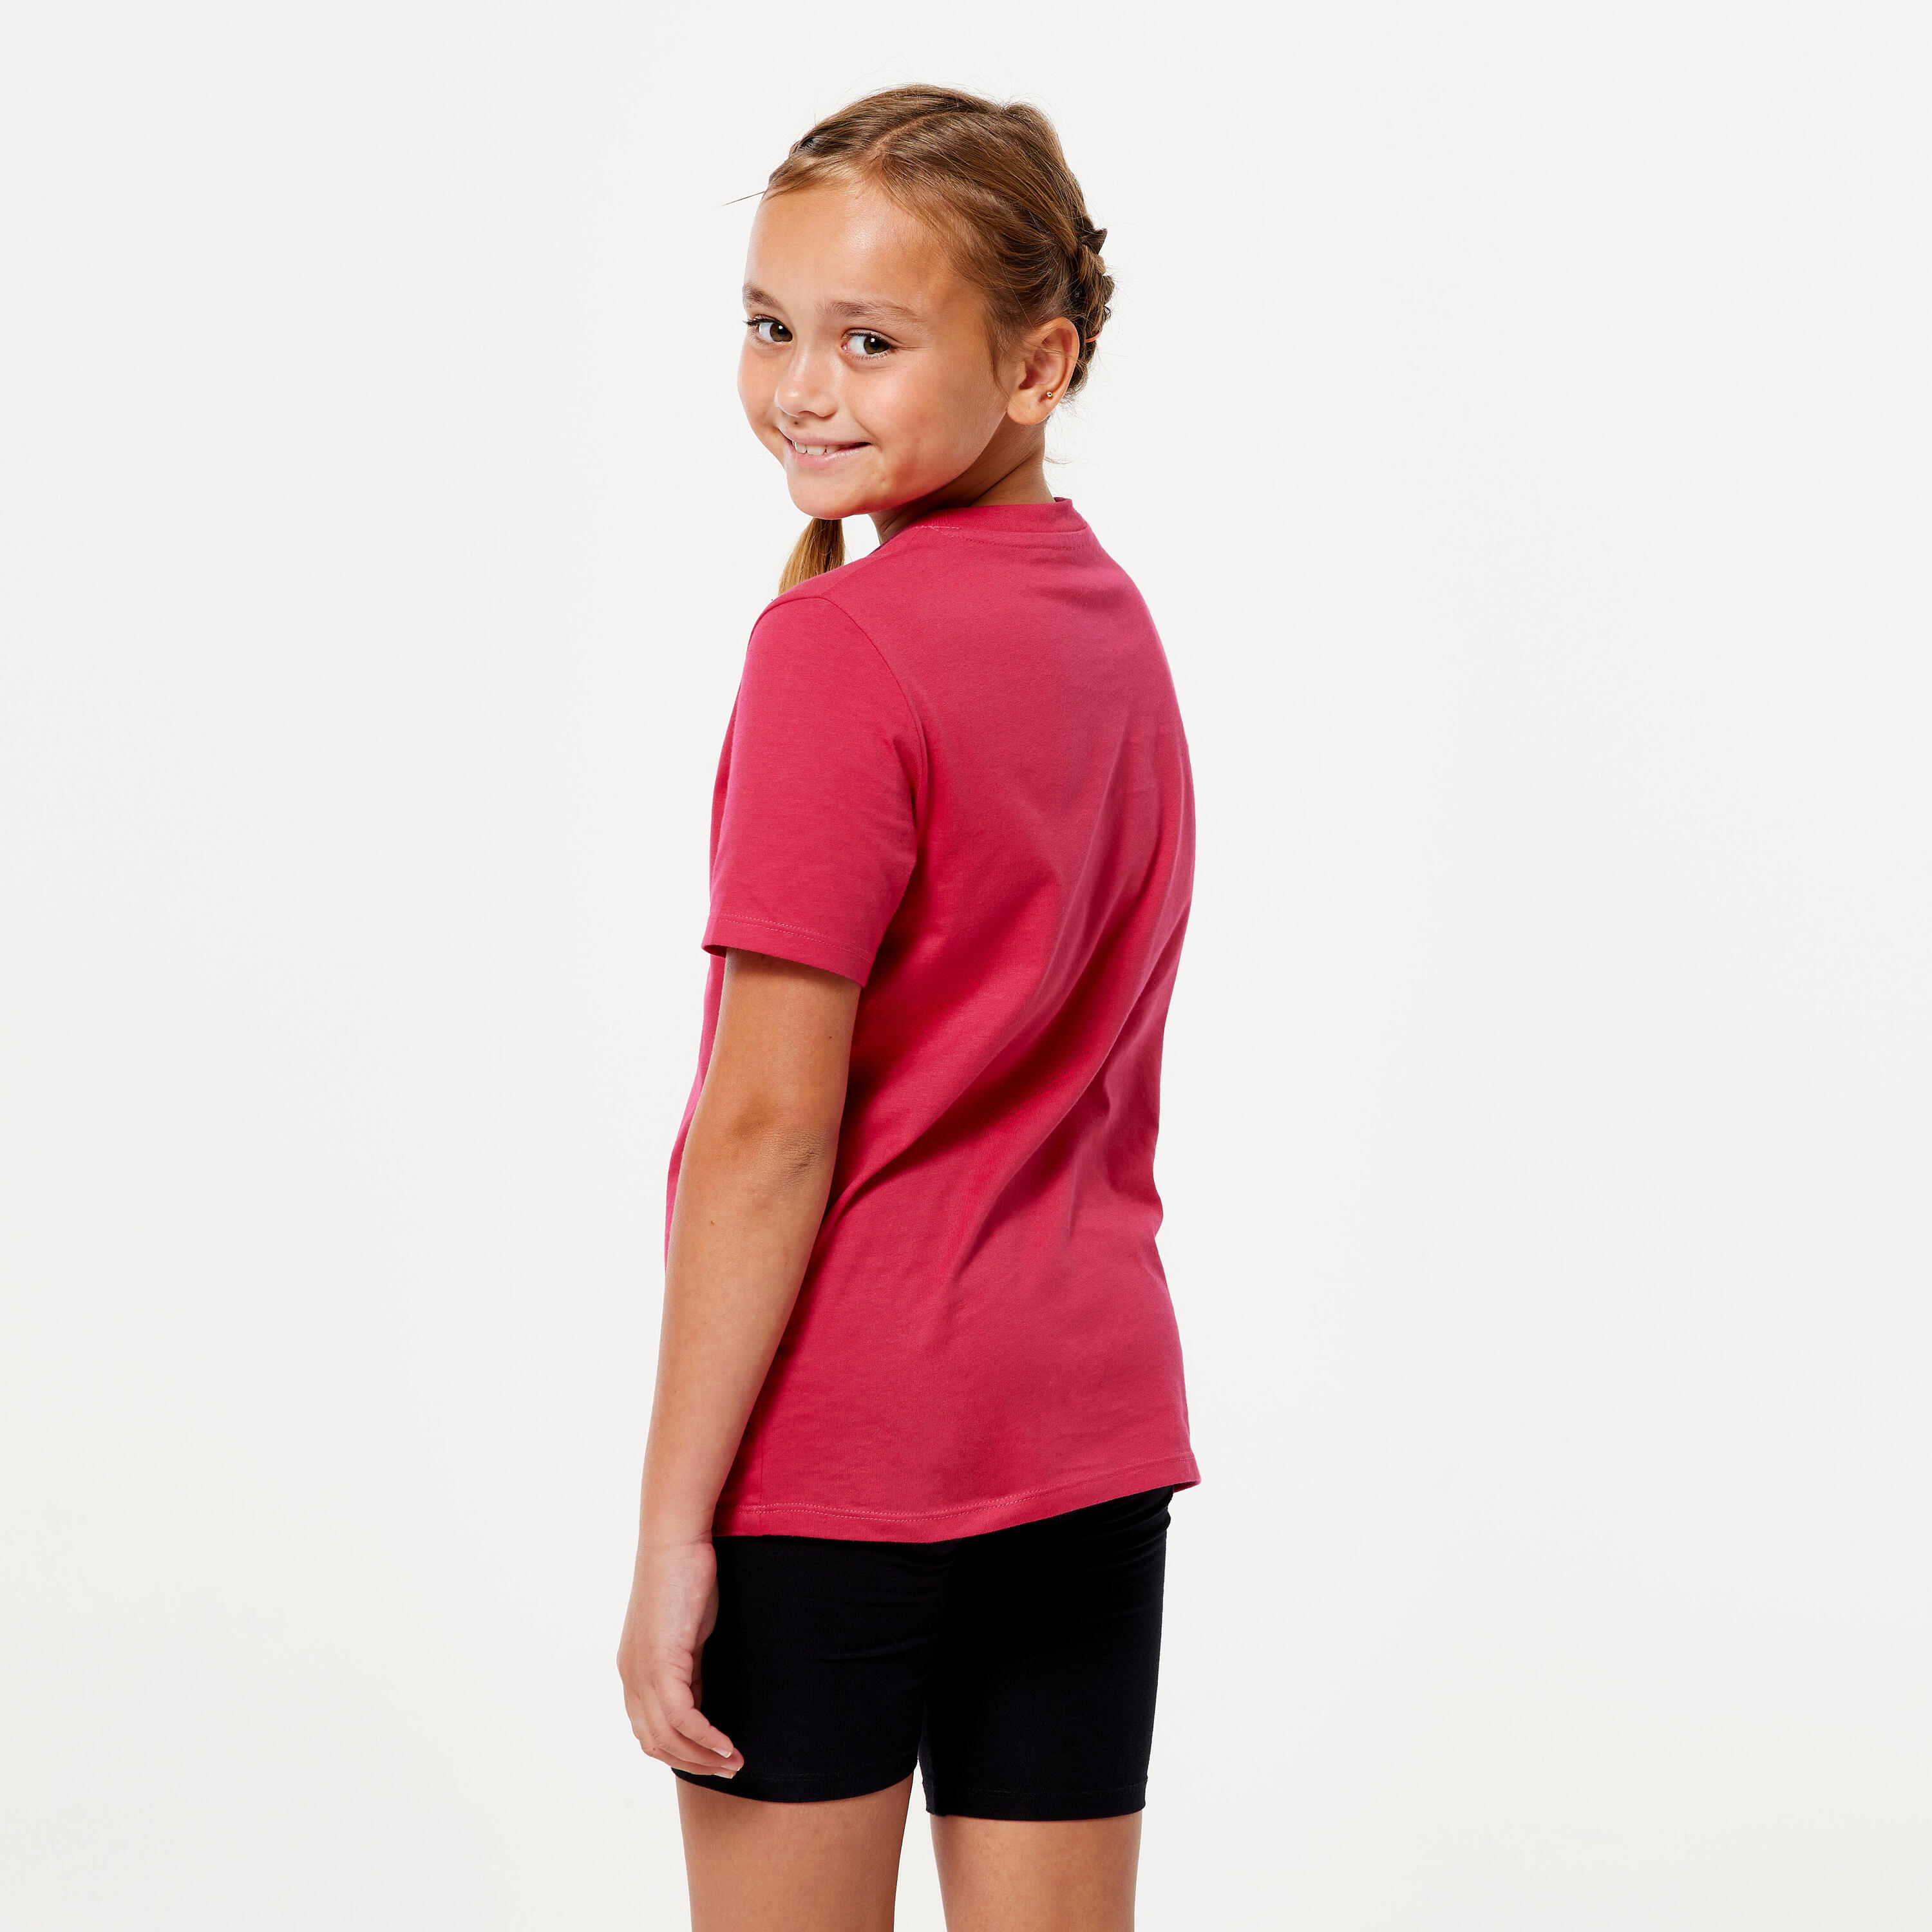 Kids' Unisex Cotton T-Shirt - Fuchsia Pink 4/6